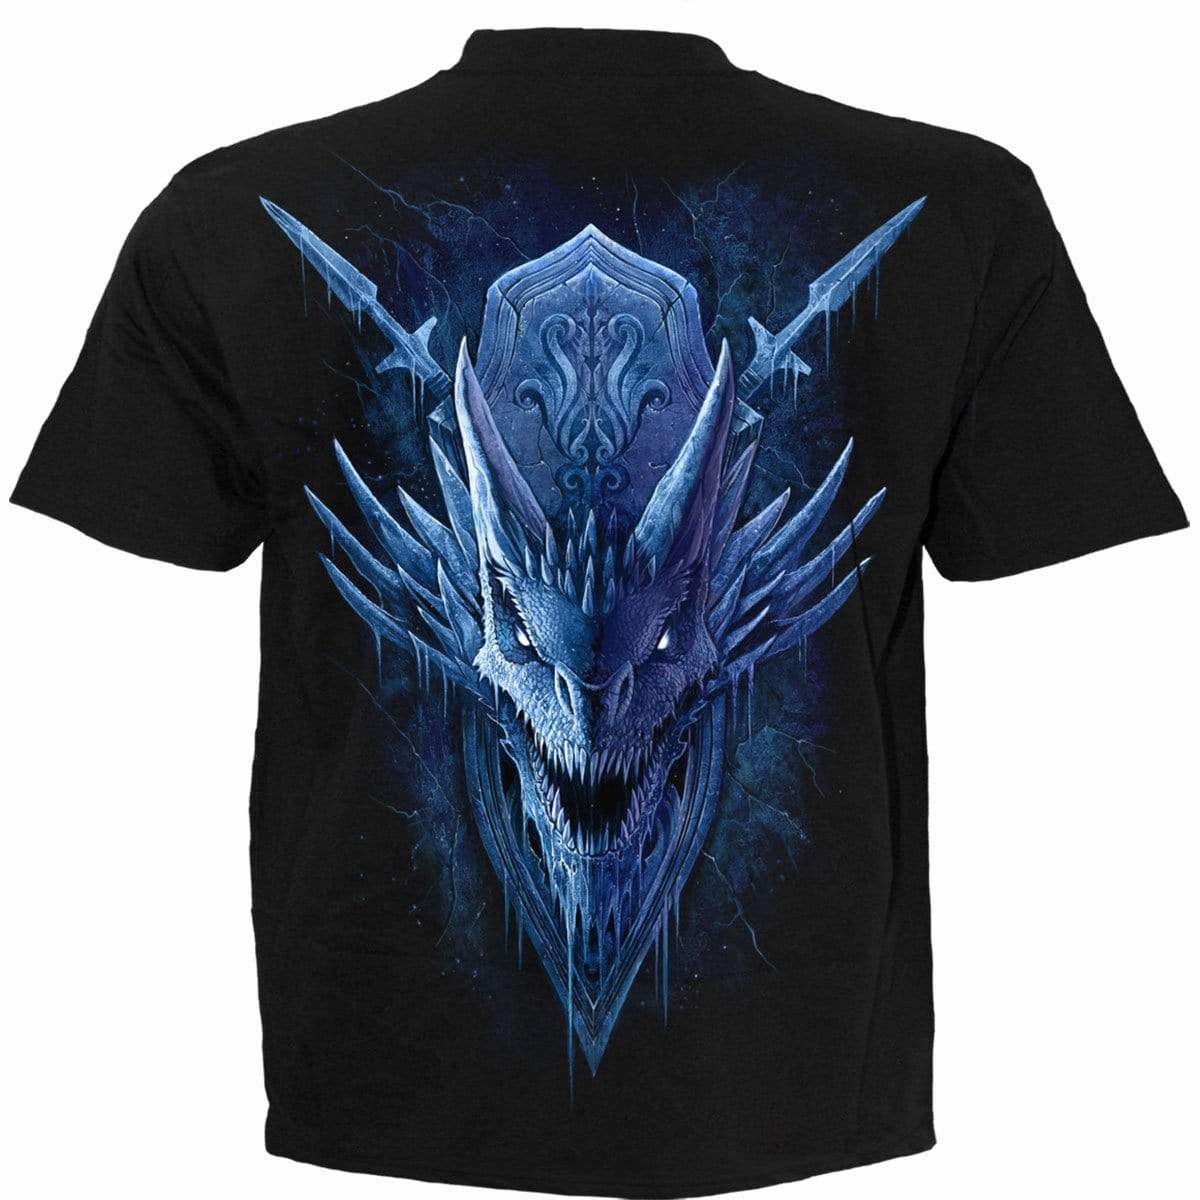 ICE DRAGON - T-Shirt Black